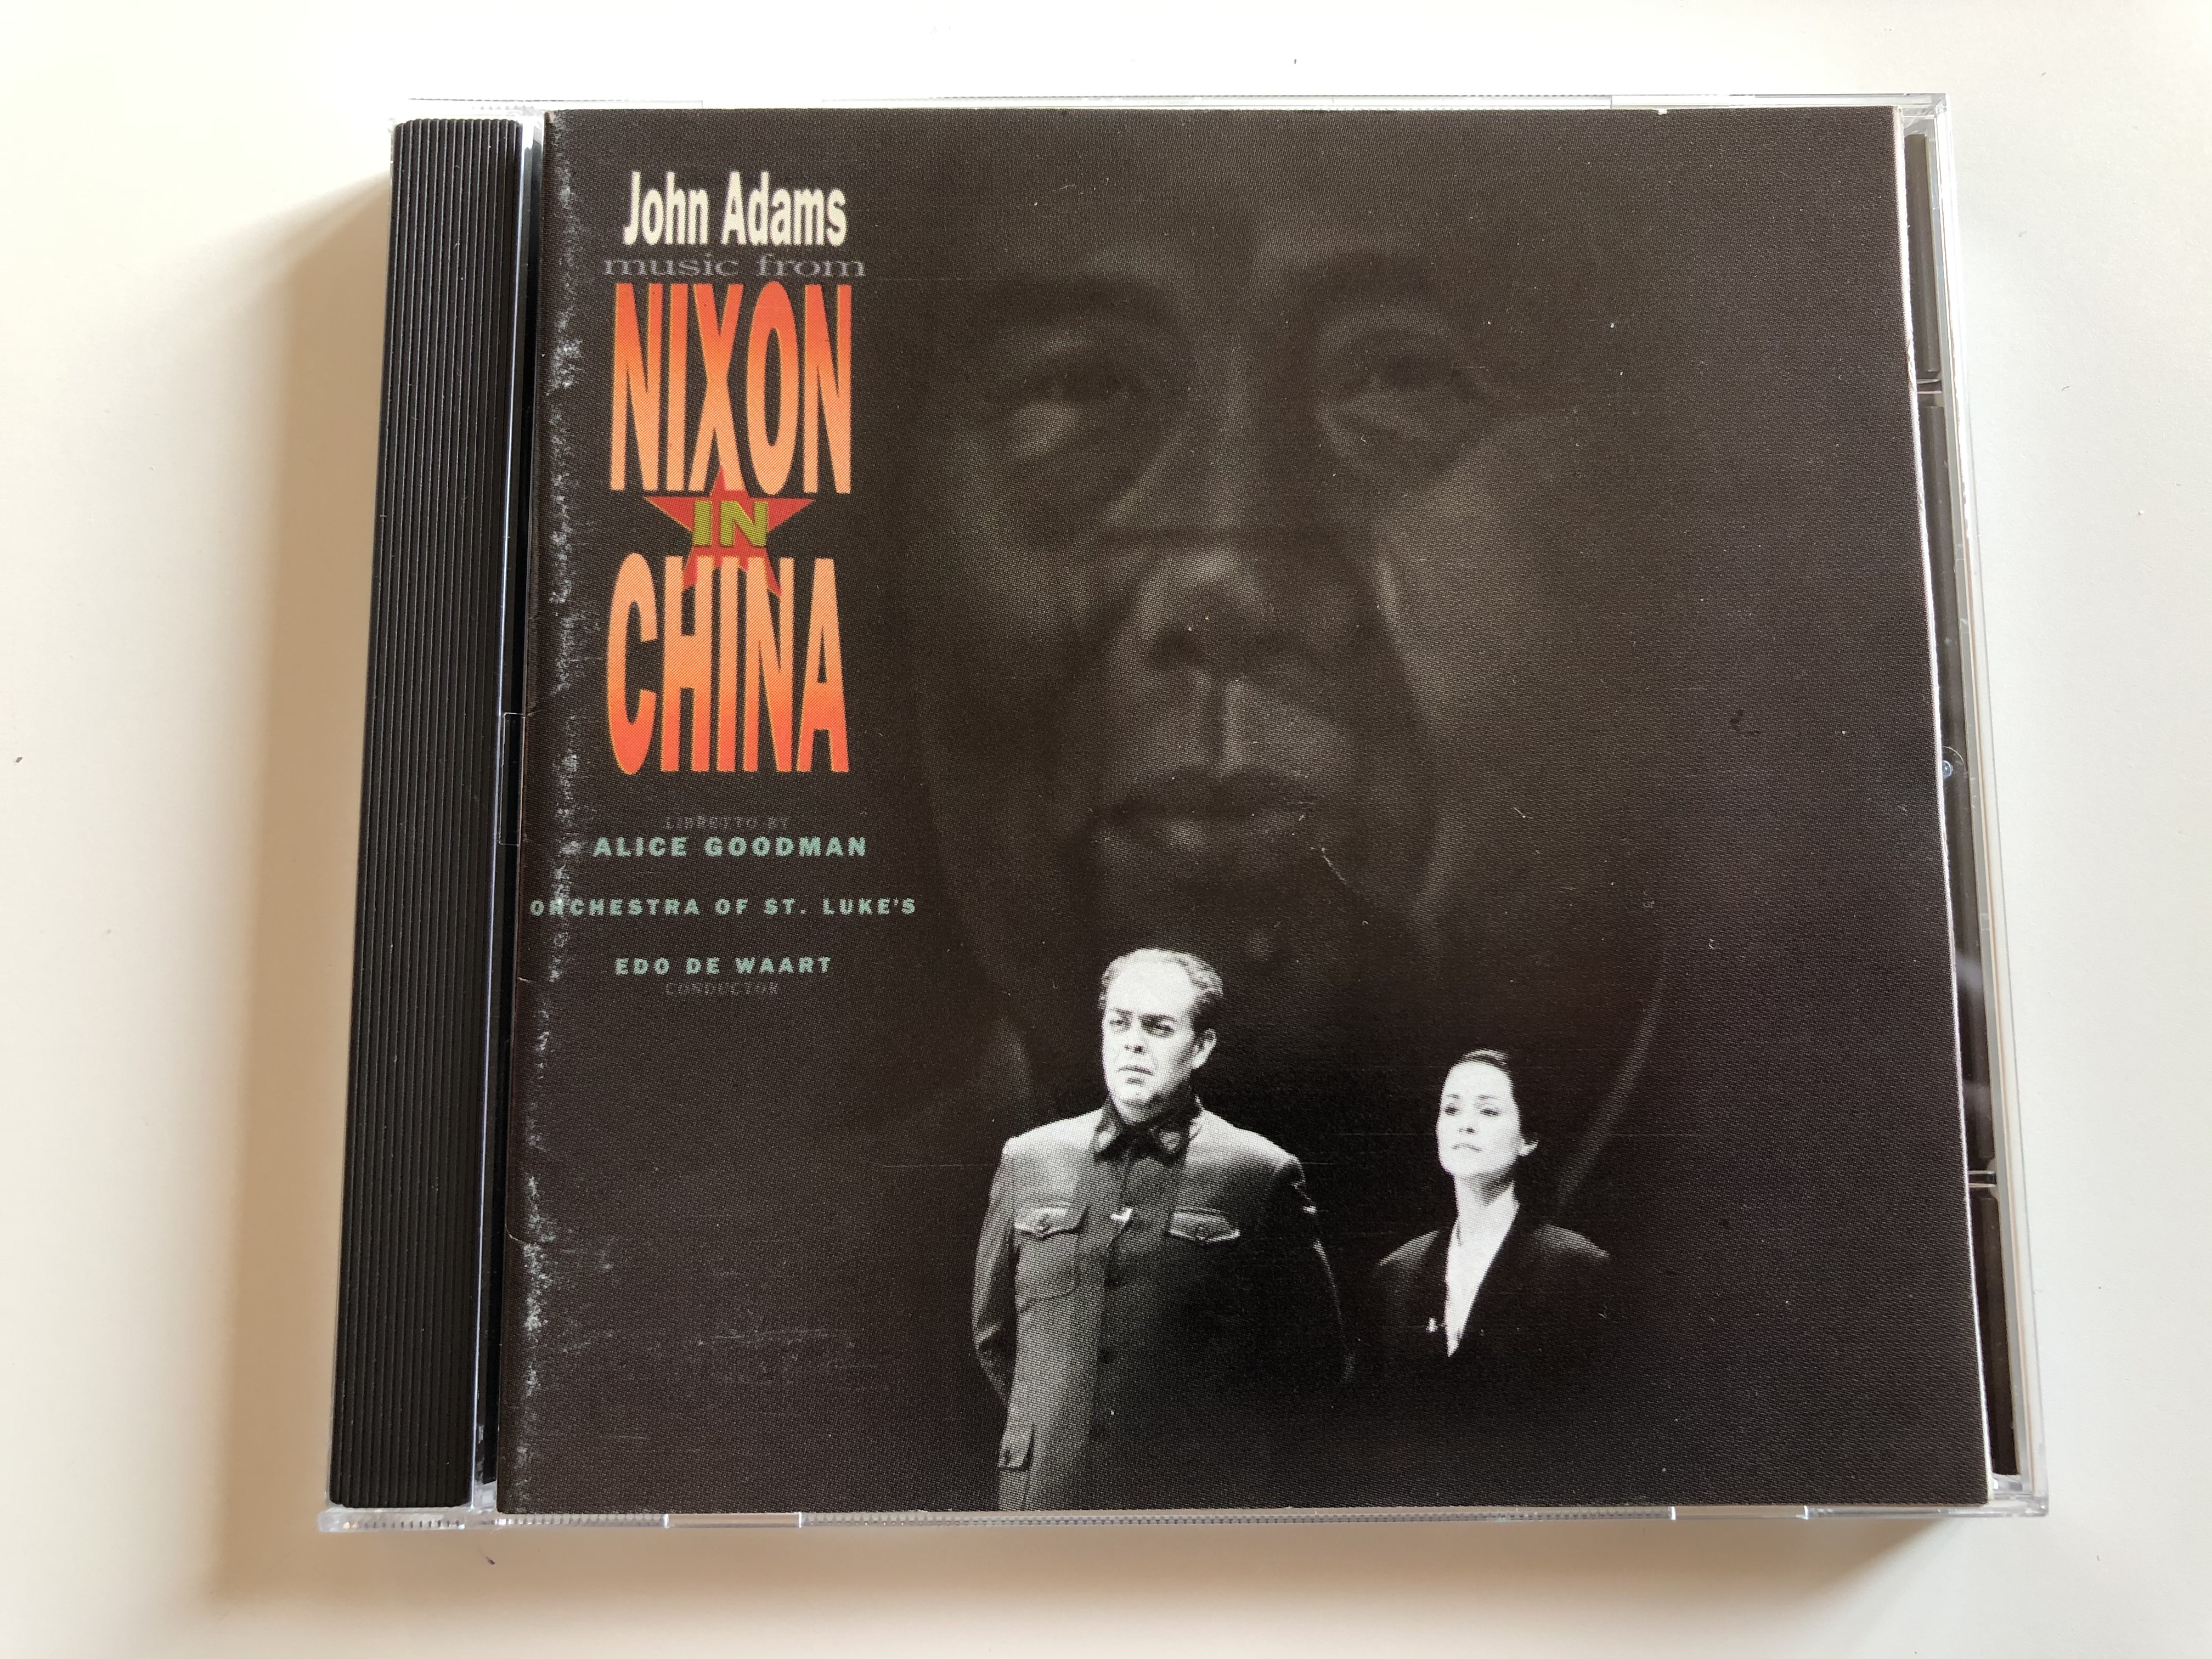 john-adams-music-from-nixon-in-china-libretto-by-alice-goodman-orchestra-of-st.-luke-s-conductor-edo-de-waart-elektra-nonesuch-audio-cd-1988-79193-2-1-.jpg